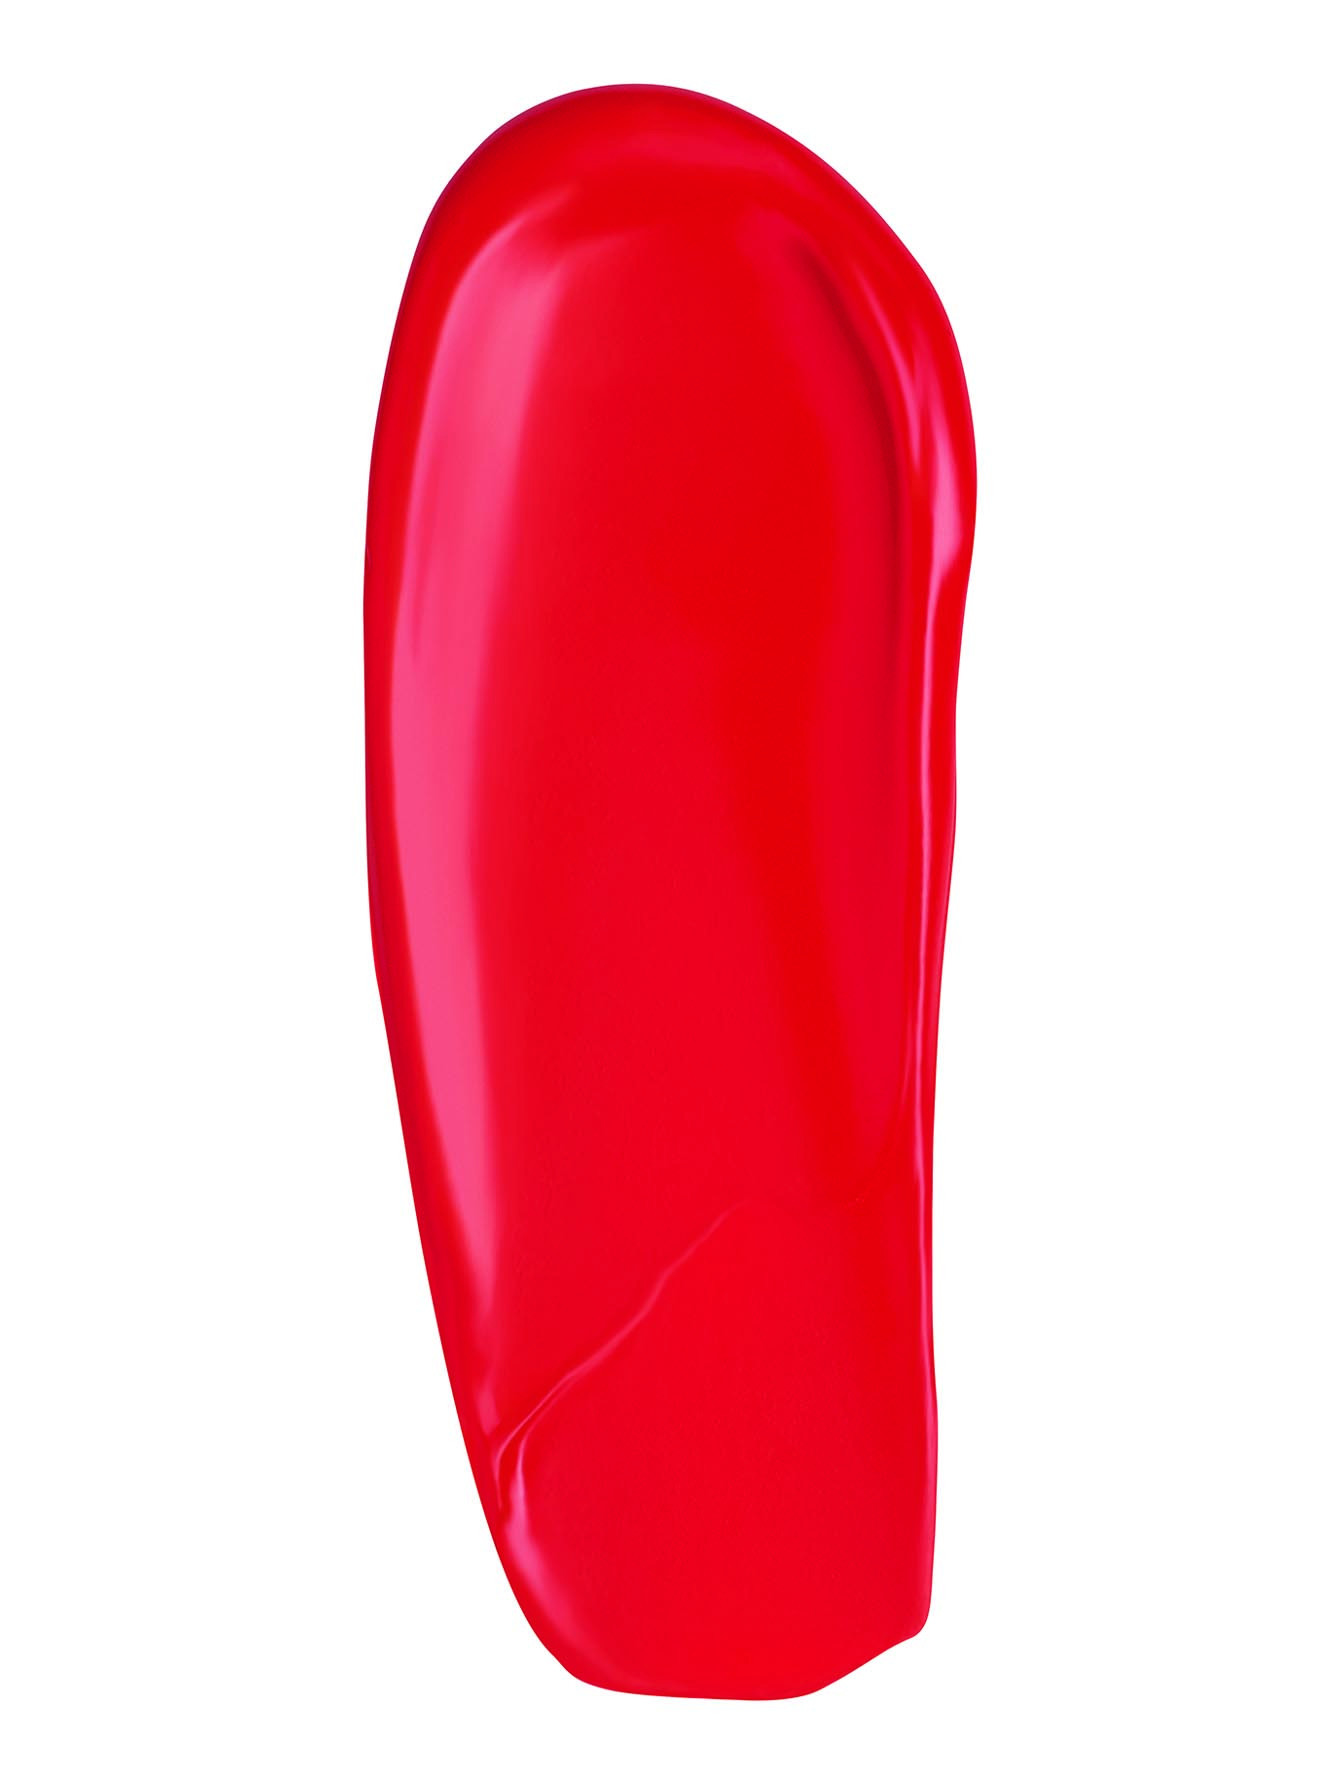 Матовая губная помада Lip-Expert Matte Liquid Lipstick, 8 Red Shot, 4 мл - Обтравка1